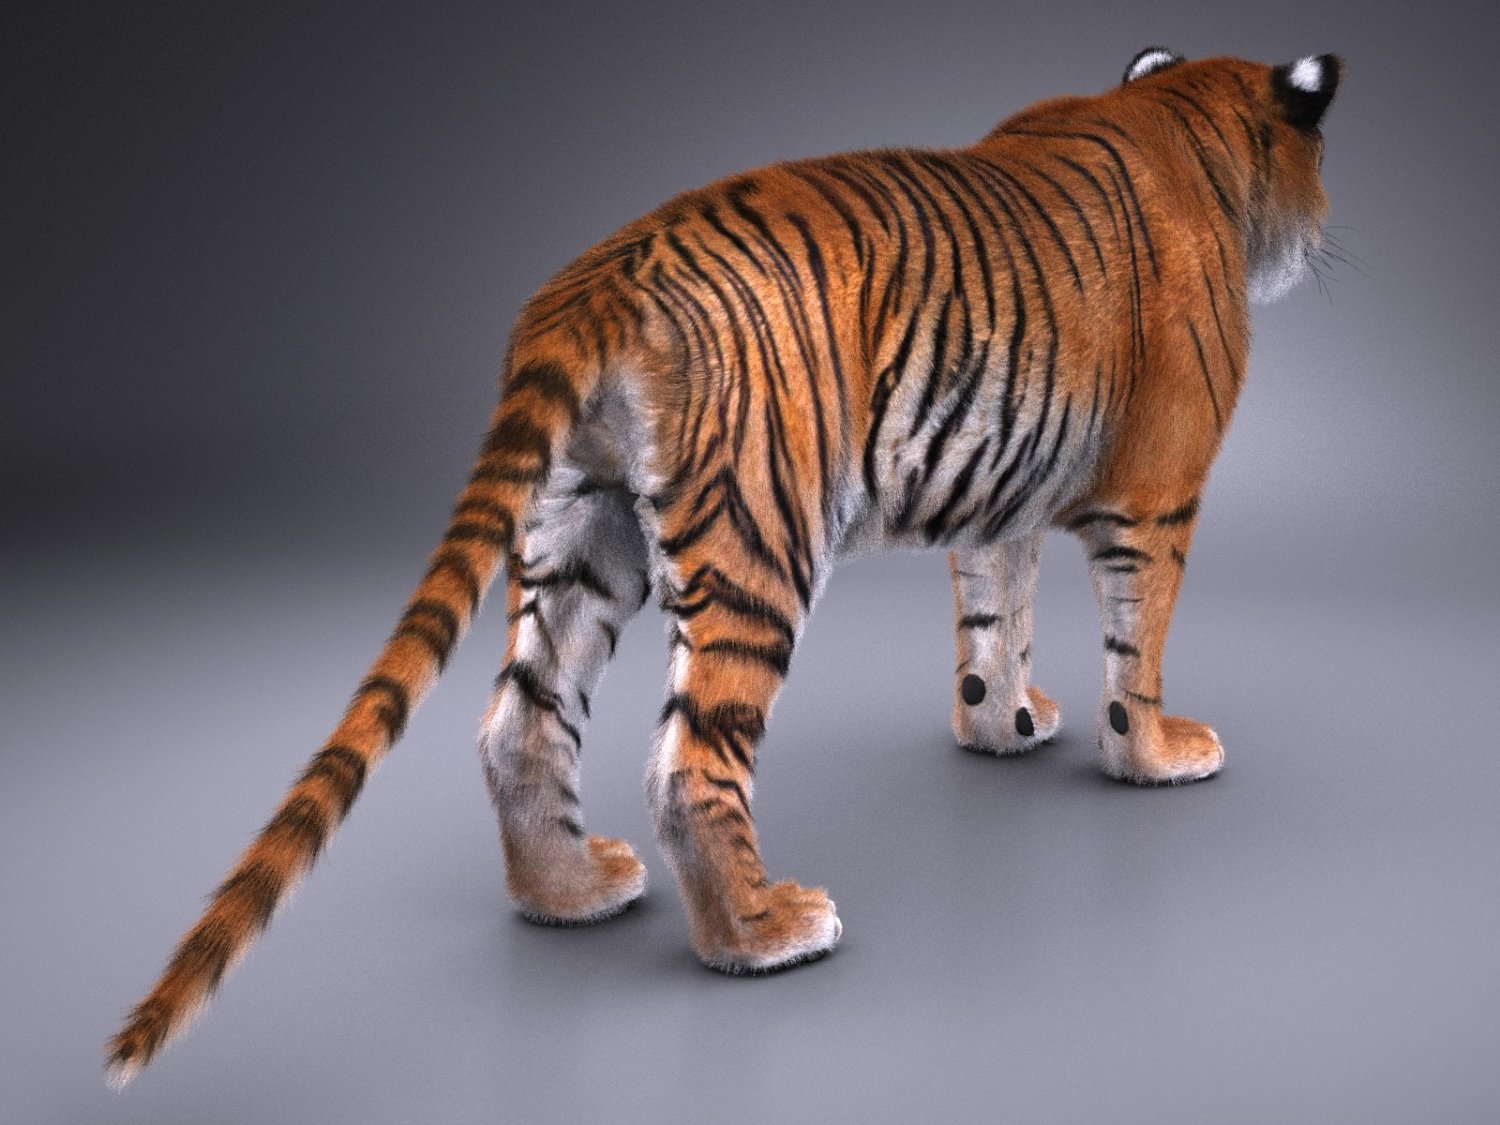 Tigre grátis 3D Modelos baixar - Free3D